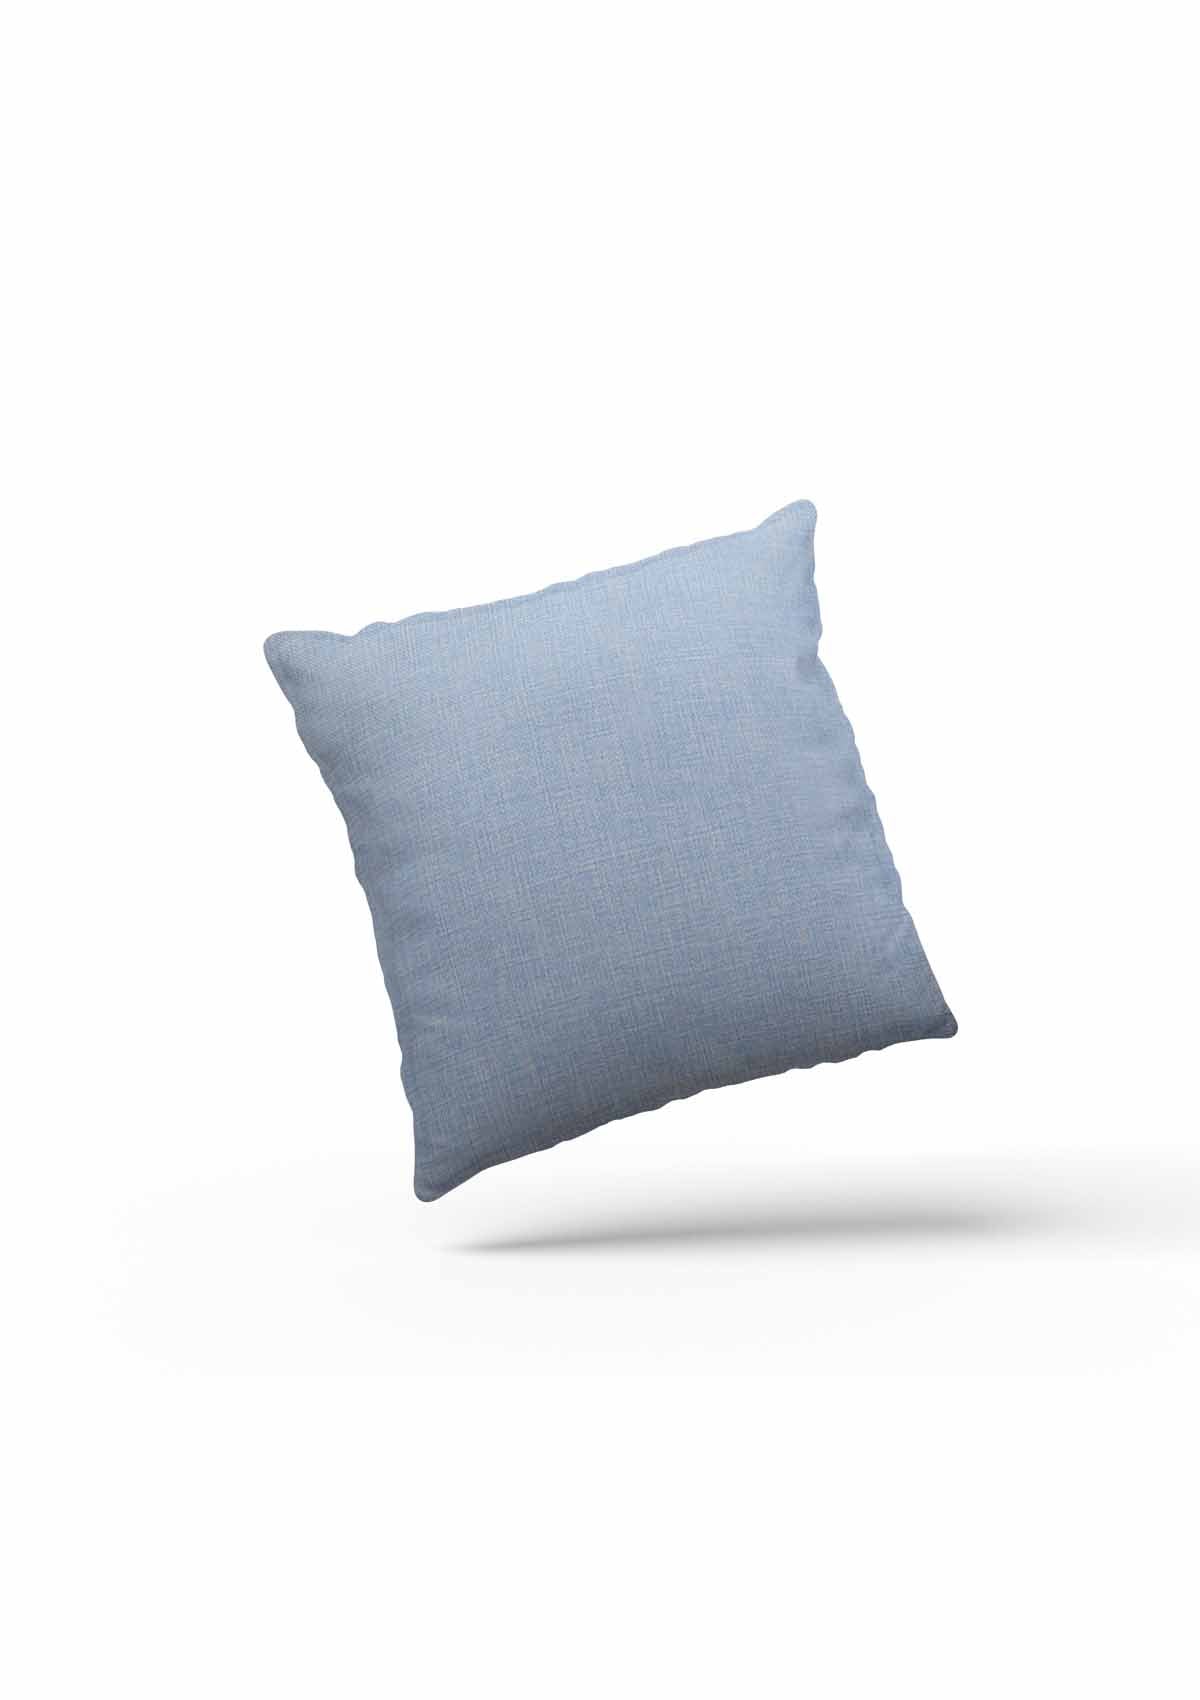 Duck Egg Blue Linen Cushion Covers | CovermyCushion 